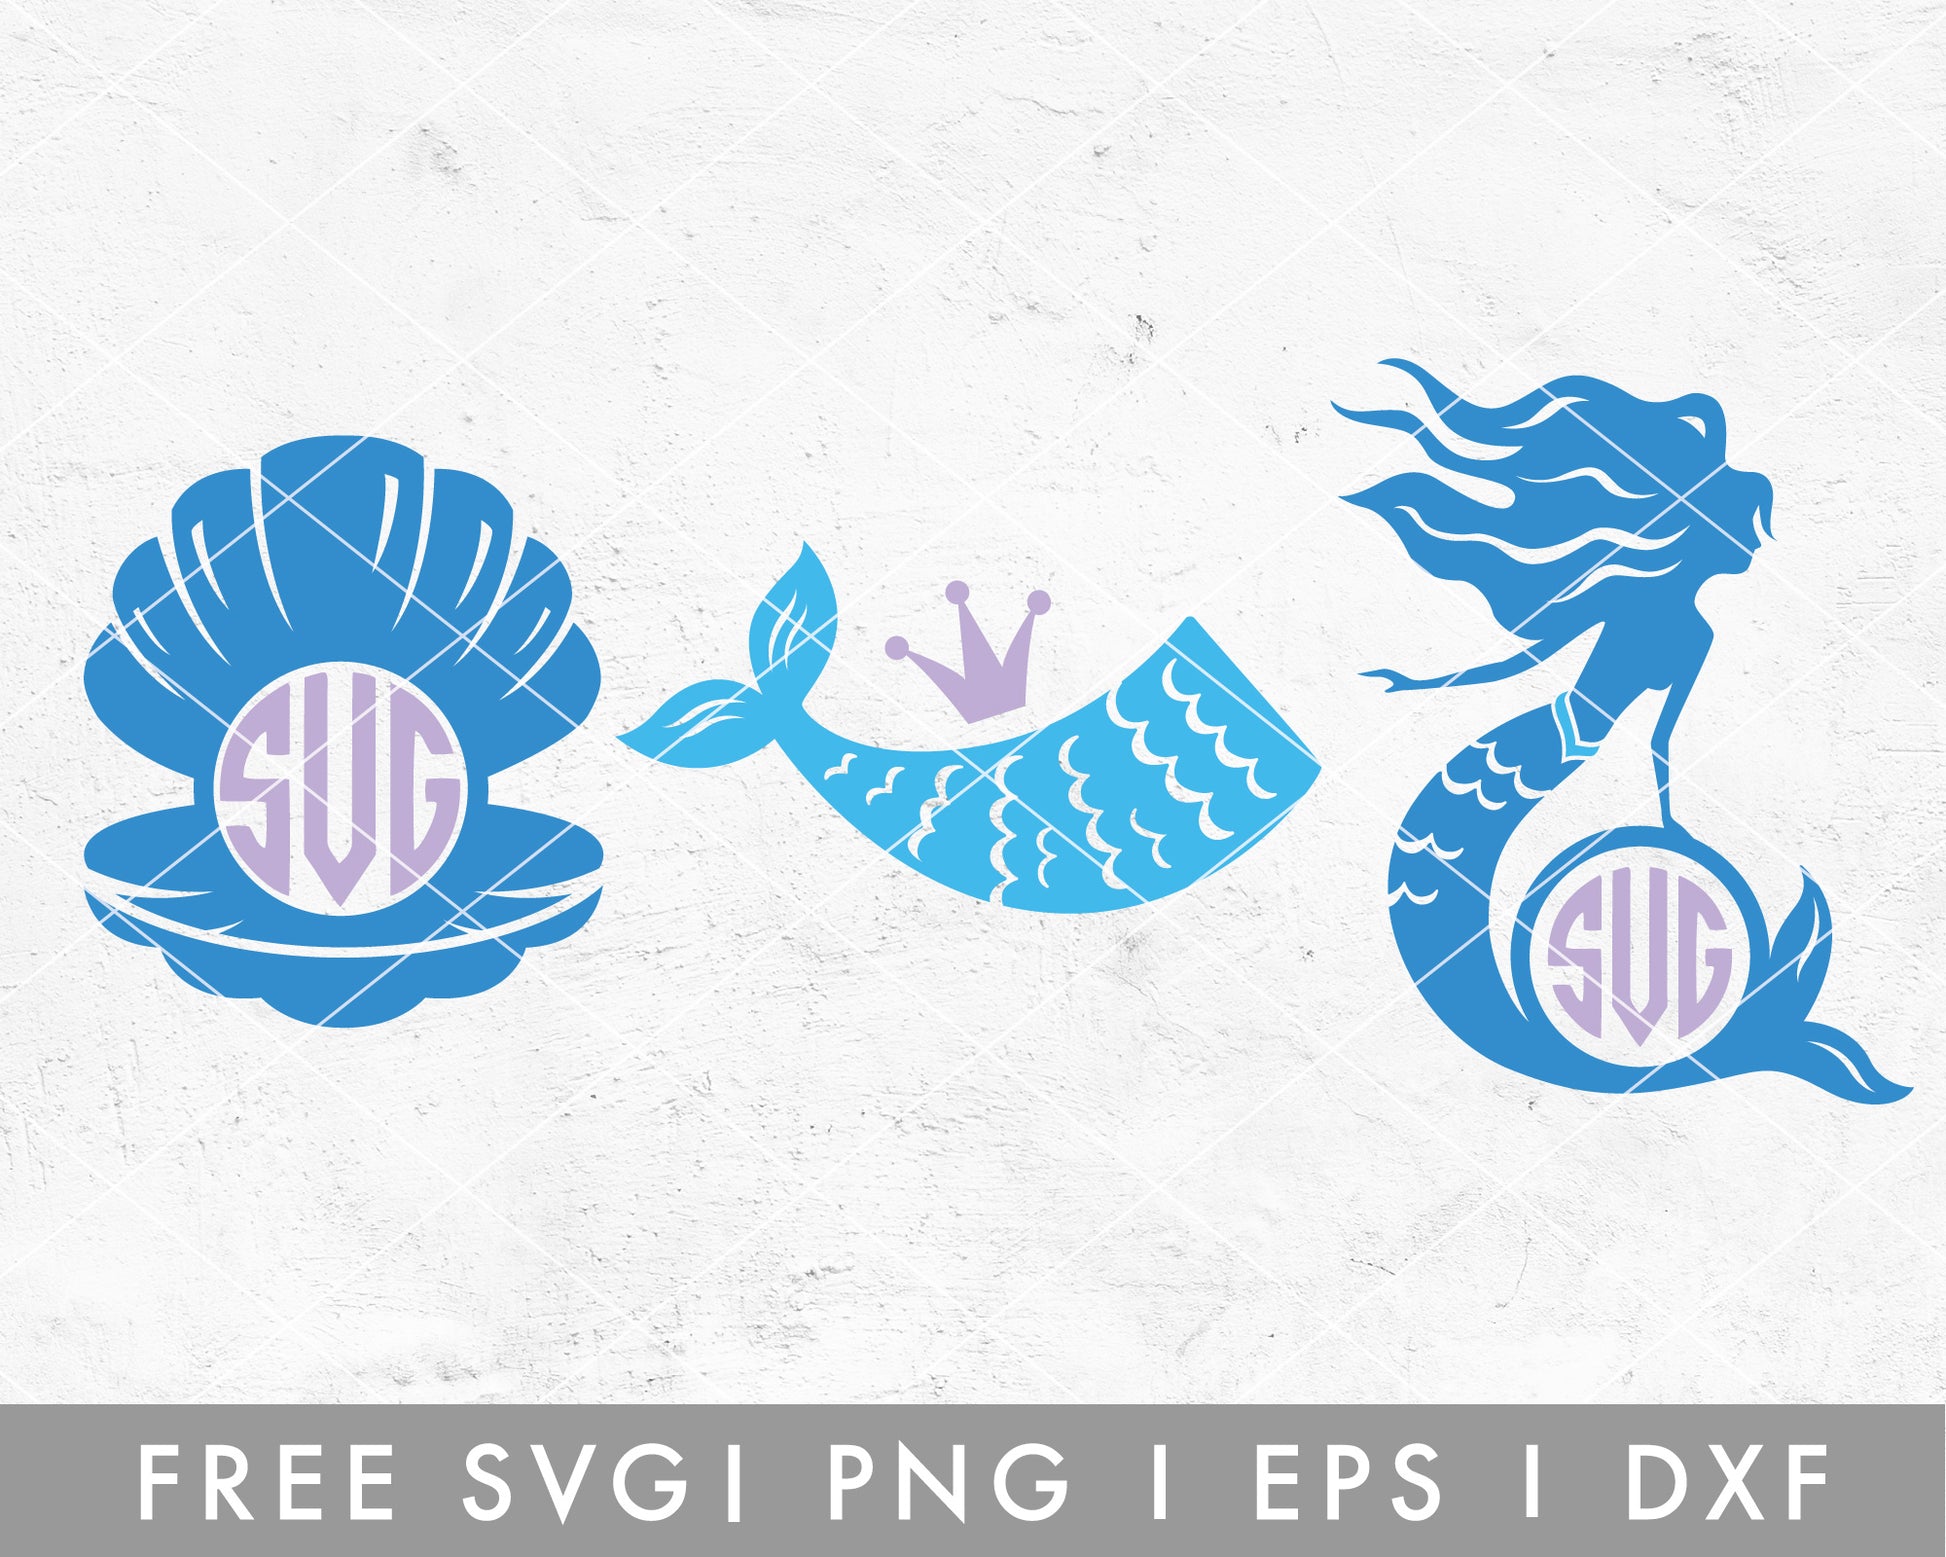 FREE Mermaid SVG | Mermaid Tail Monogram SVG Cut File for Cricut, Cameo Silhouette | Free SVG Cut File